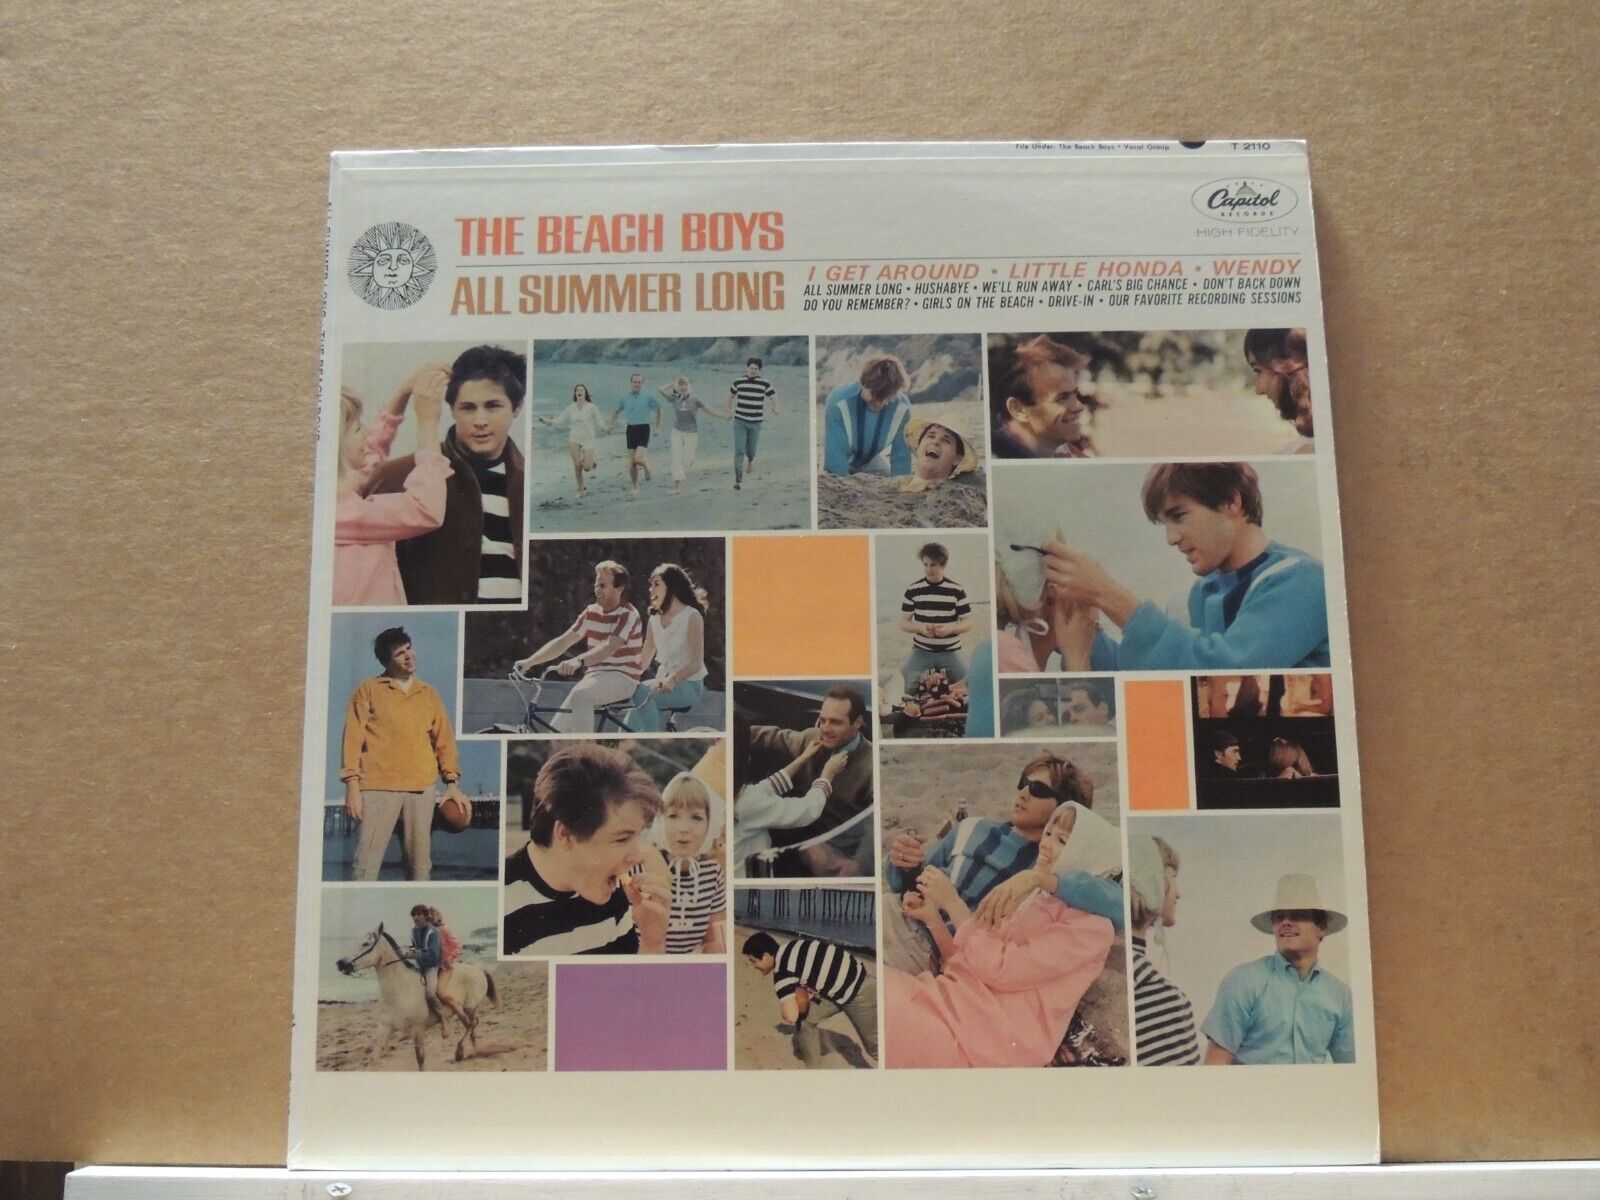 THE BEACH BOYS “ALL SUMMER LONG” MONO LP 1964